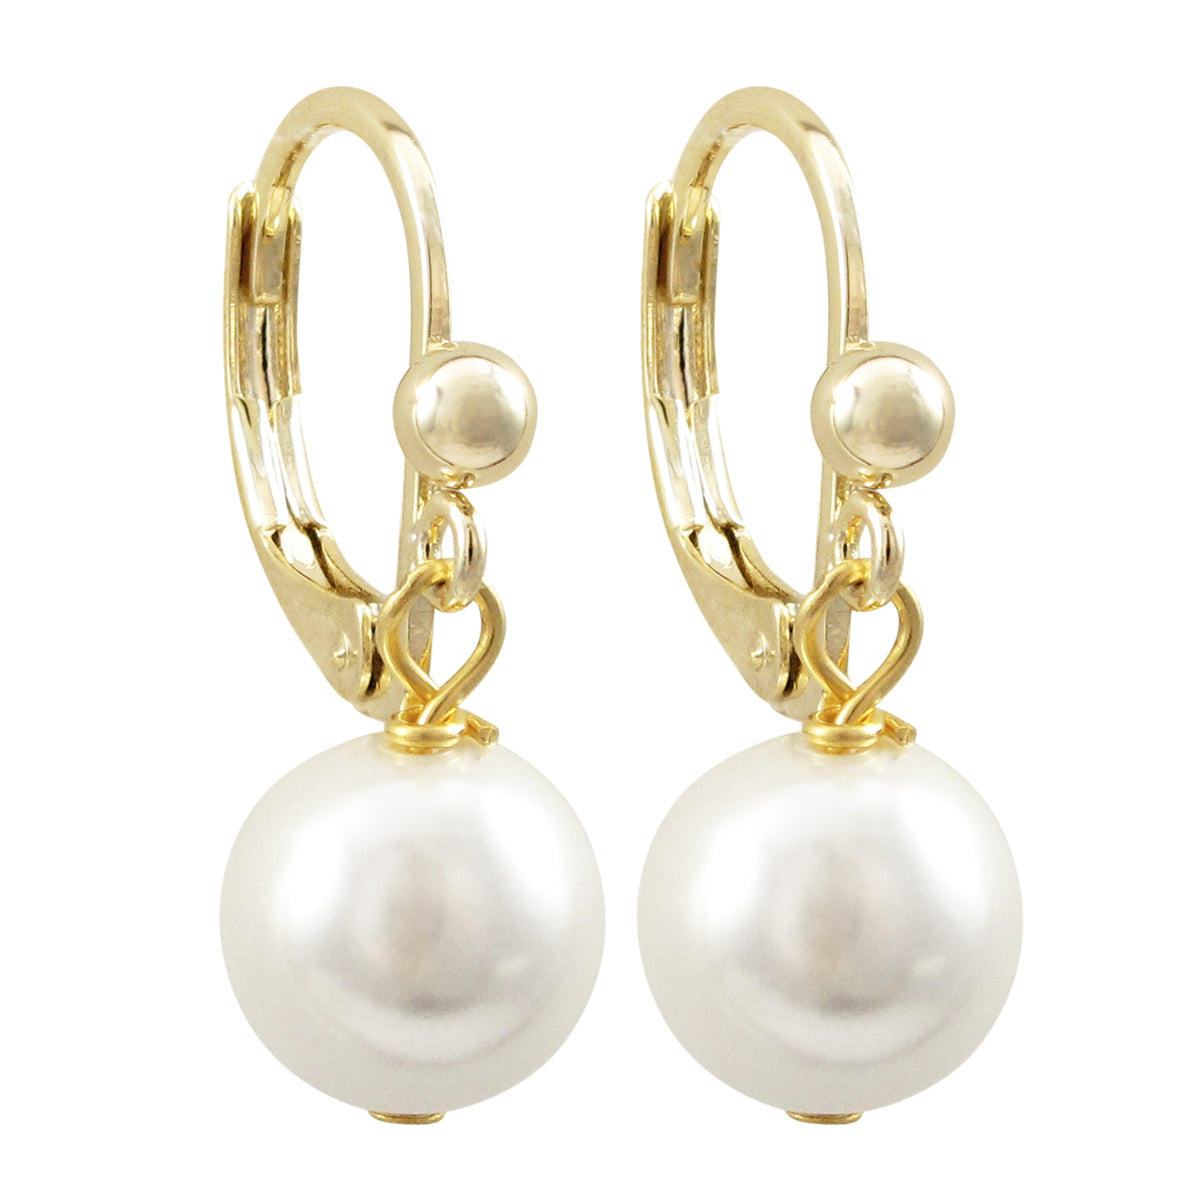 8mm Glass Pearl Hanging Earrings